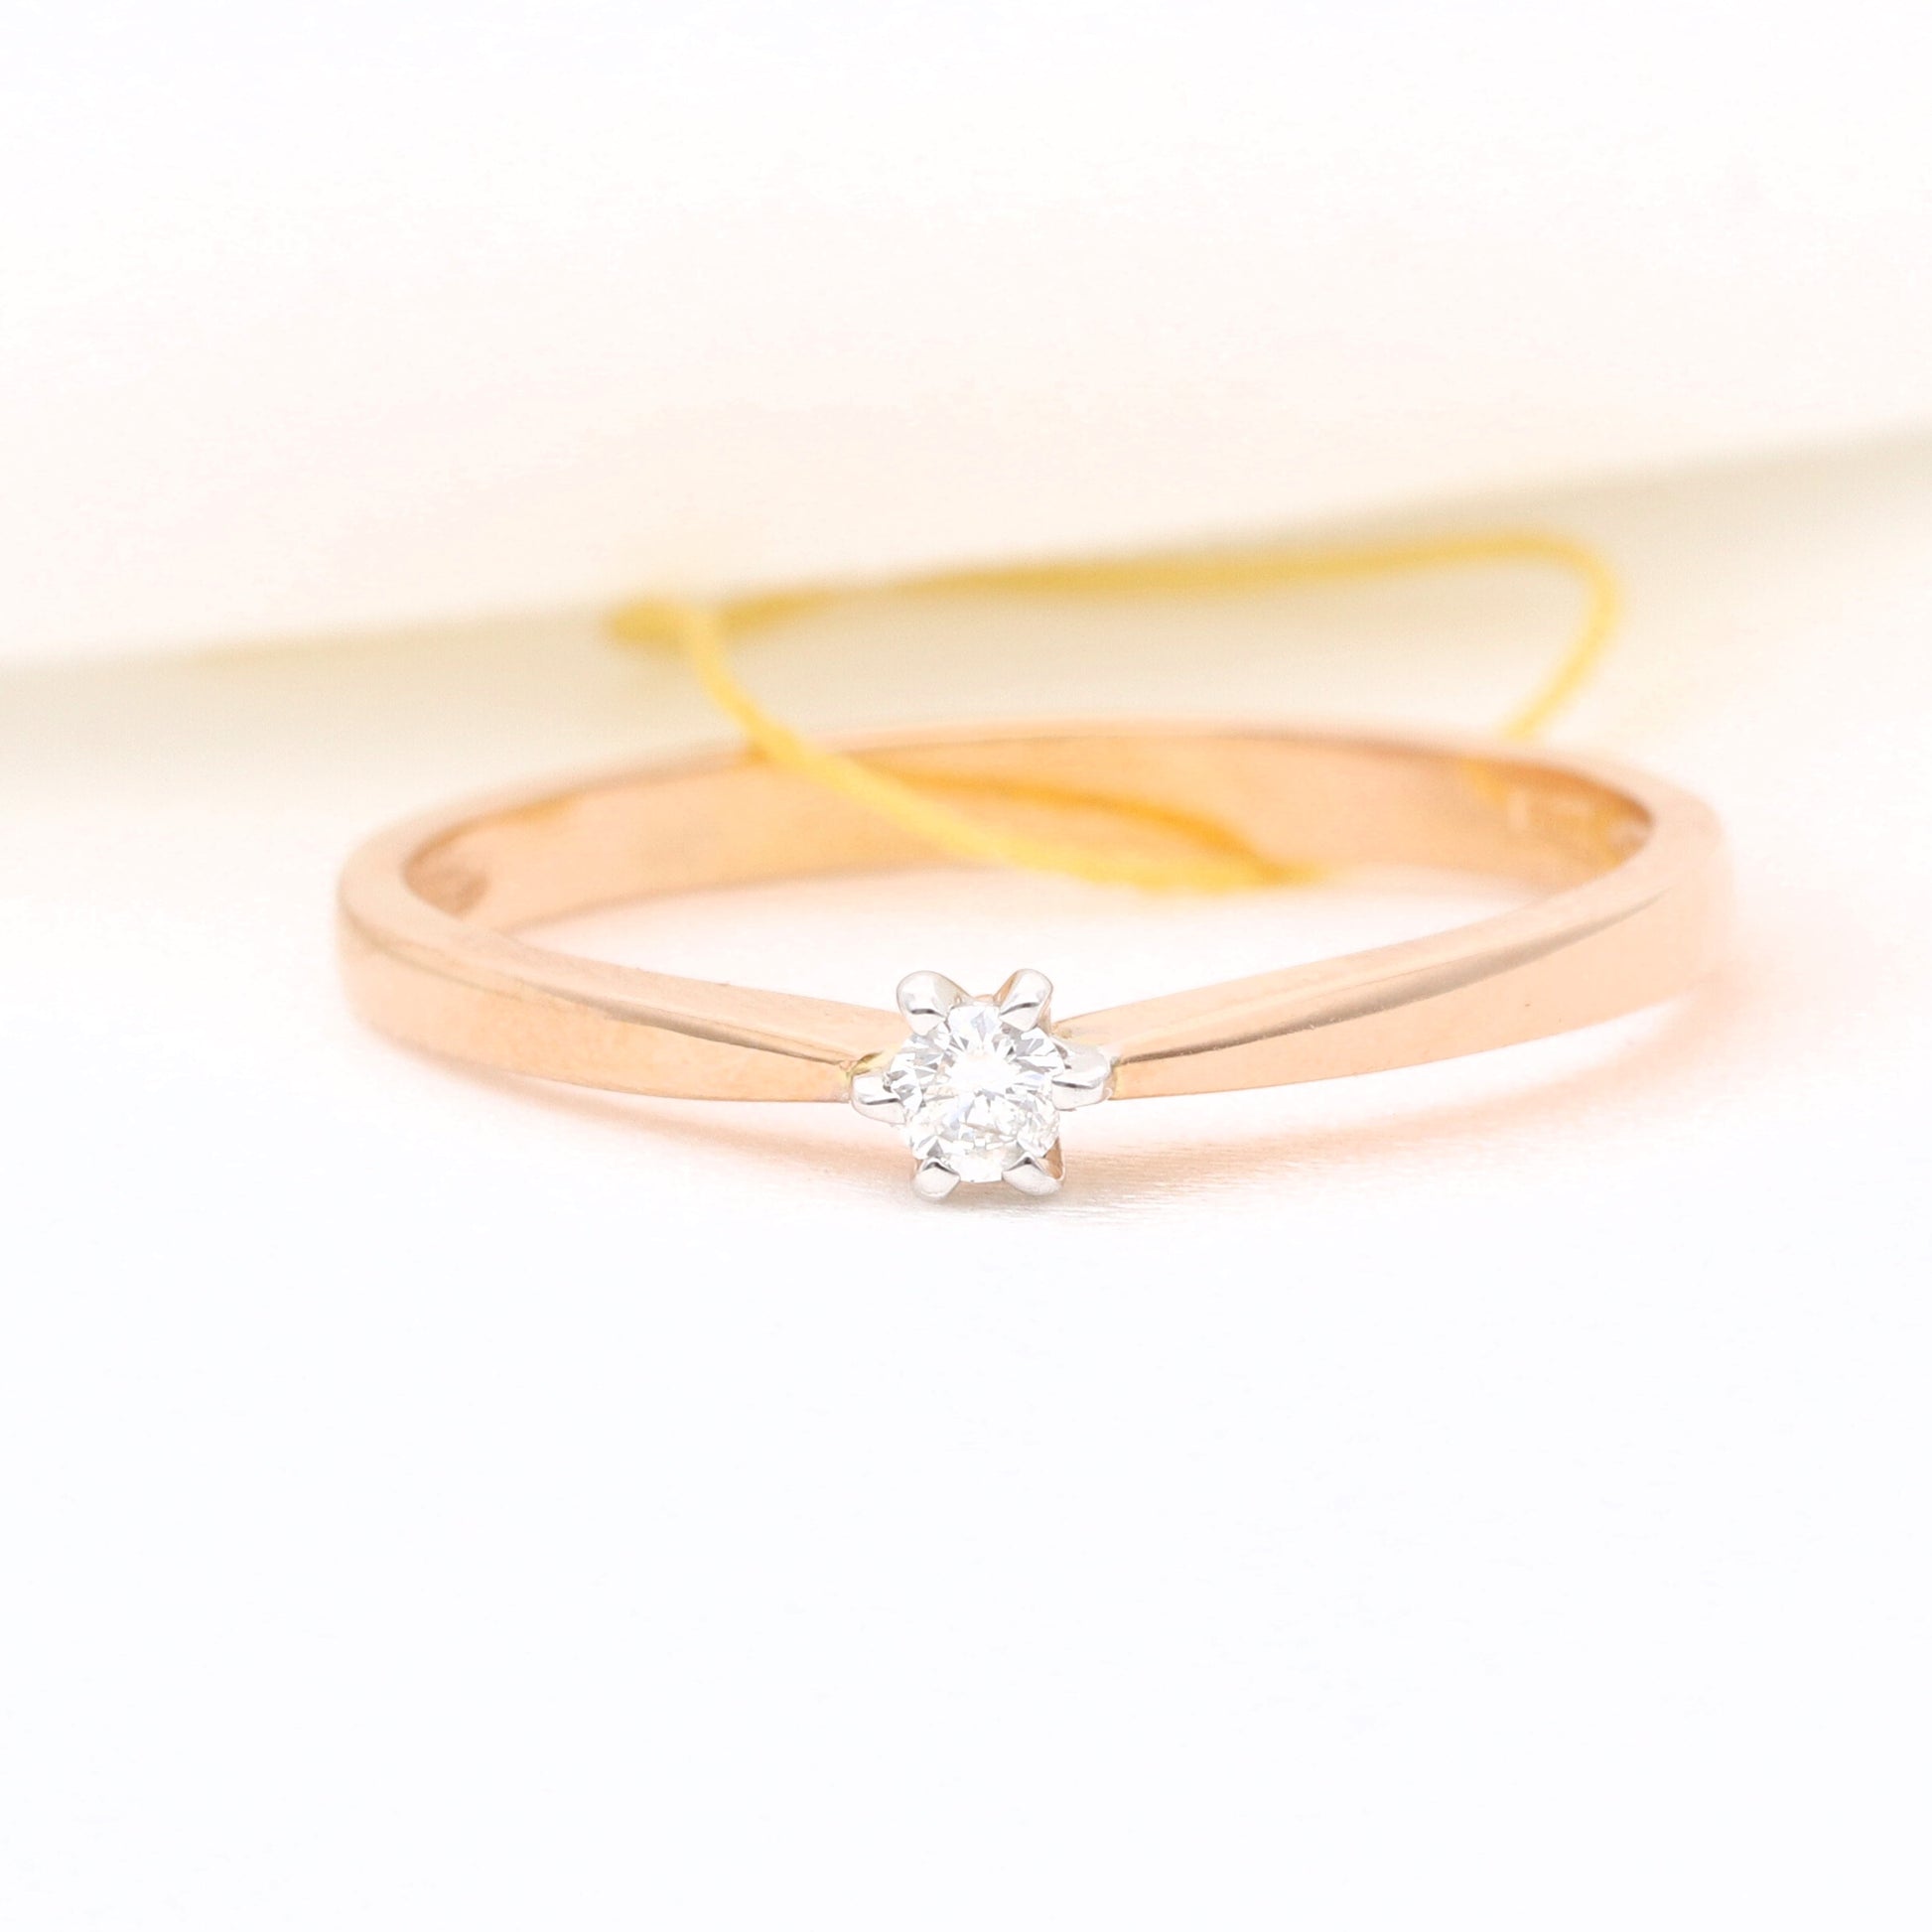 Auksinis žiedas su deimantu vestuviniaiziedai.lt